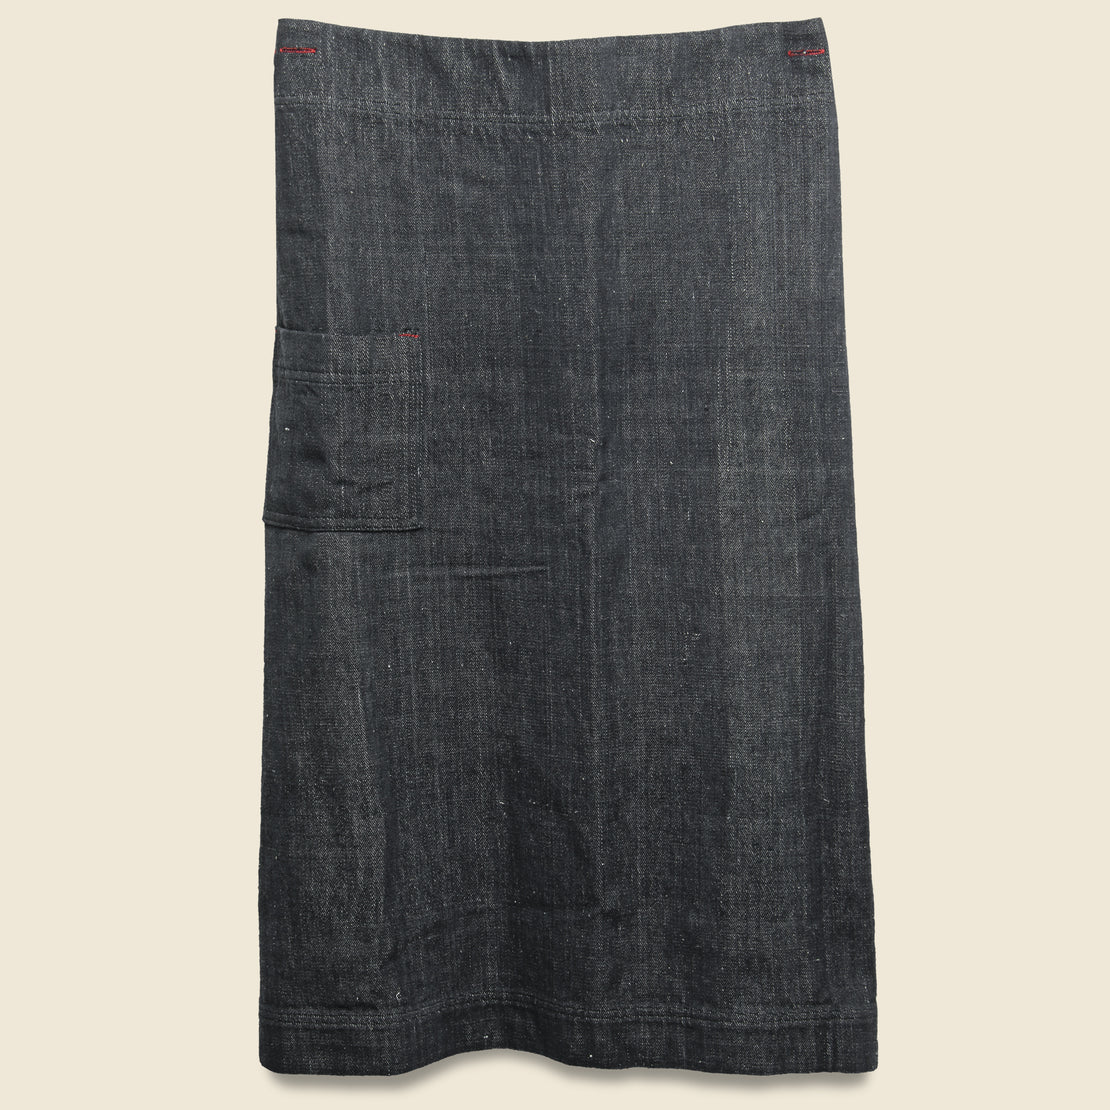 Selvedge Denim Wrap Skirt - Black - Auntie Oti - STAG Provisions - W - Onepiece - Skirt